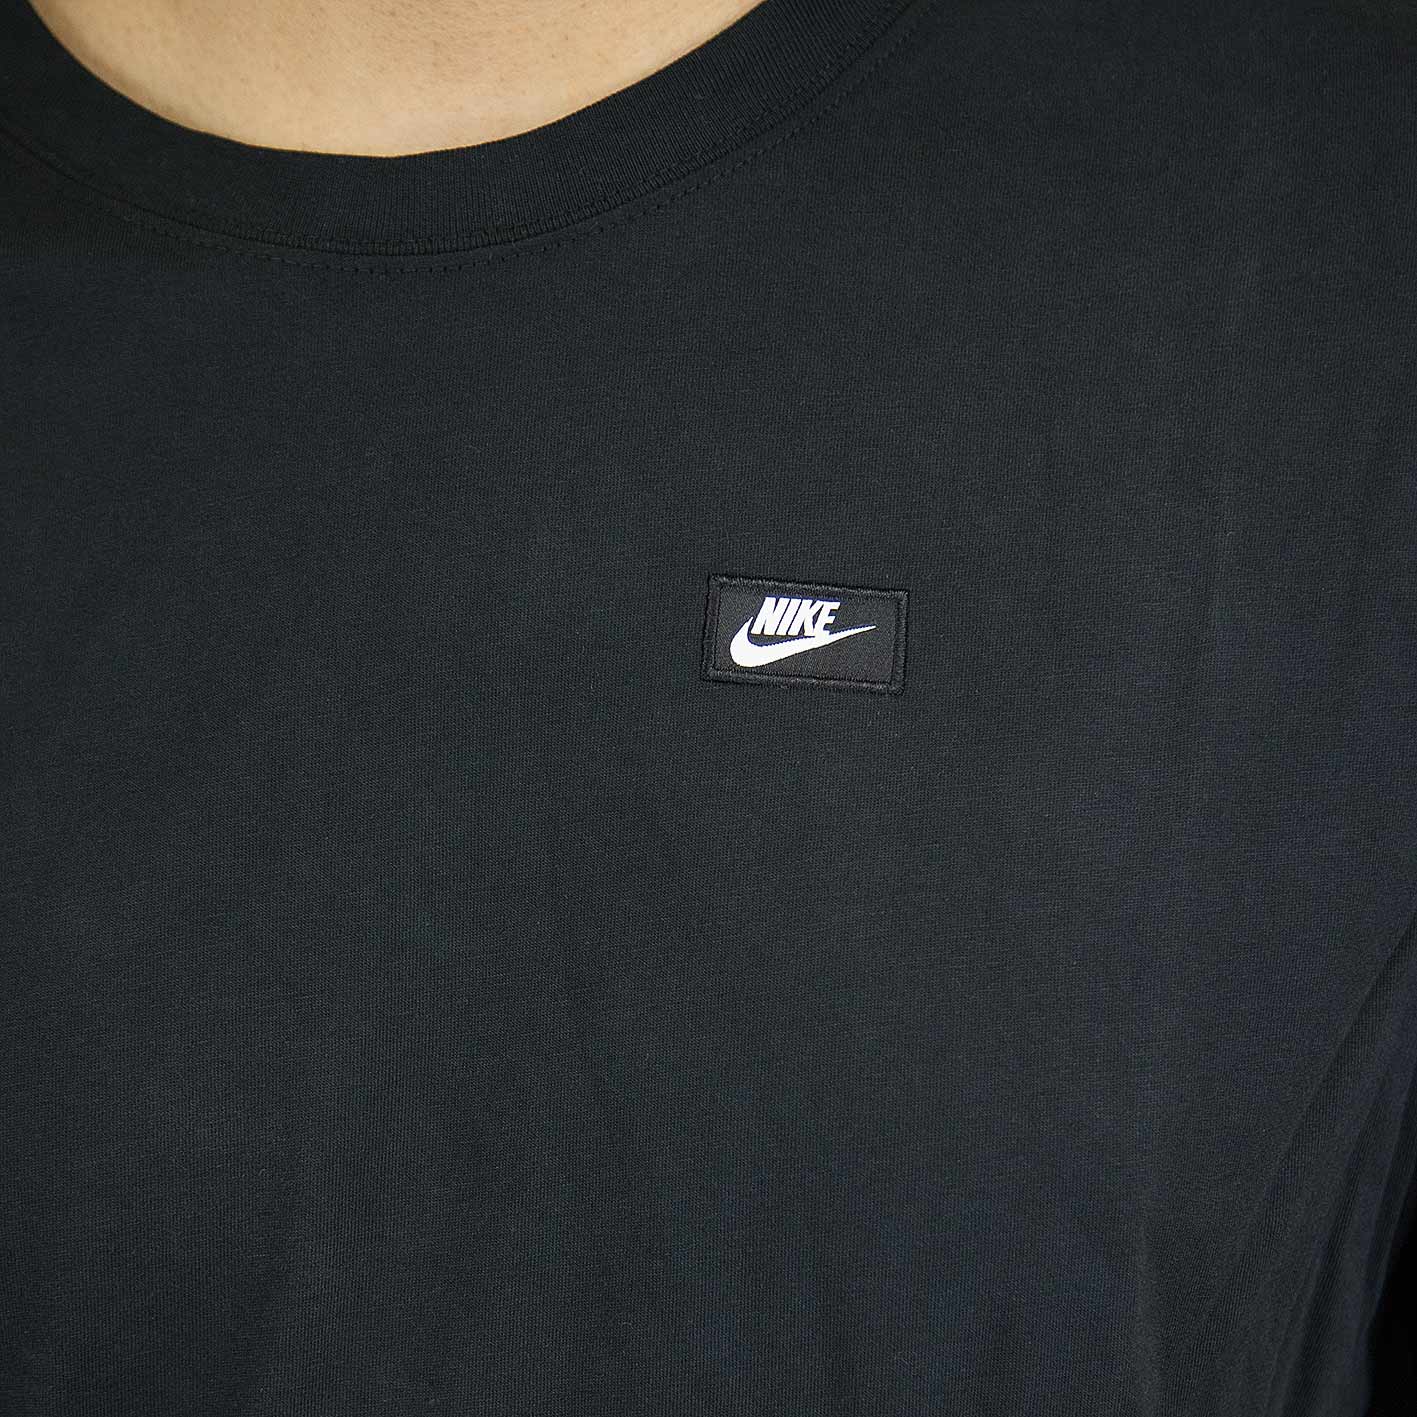 ☆ Nike Longshirt Asym schwarz - hier bestellen!